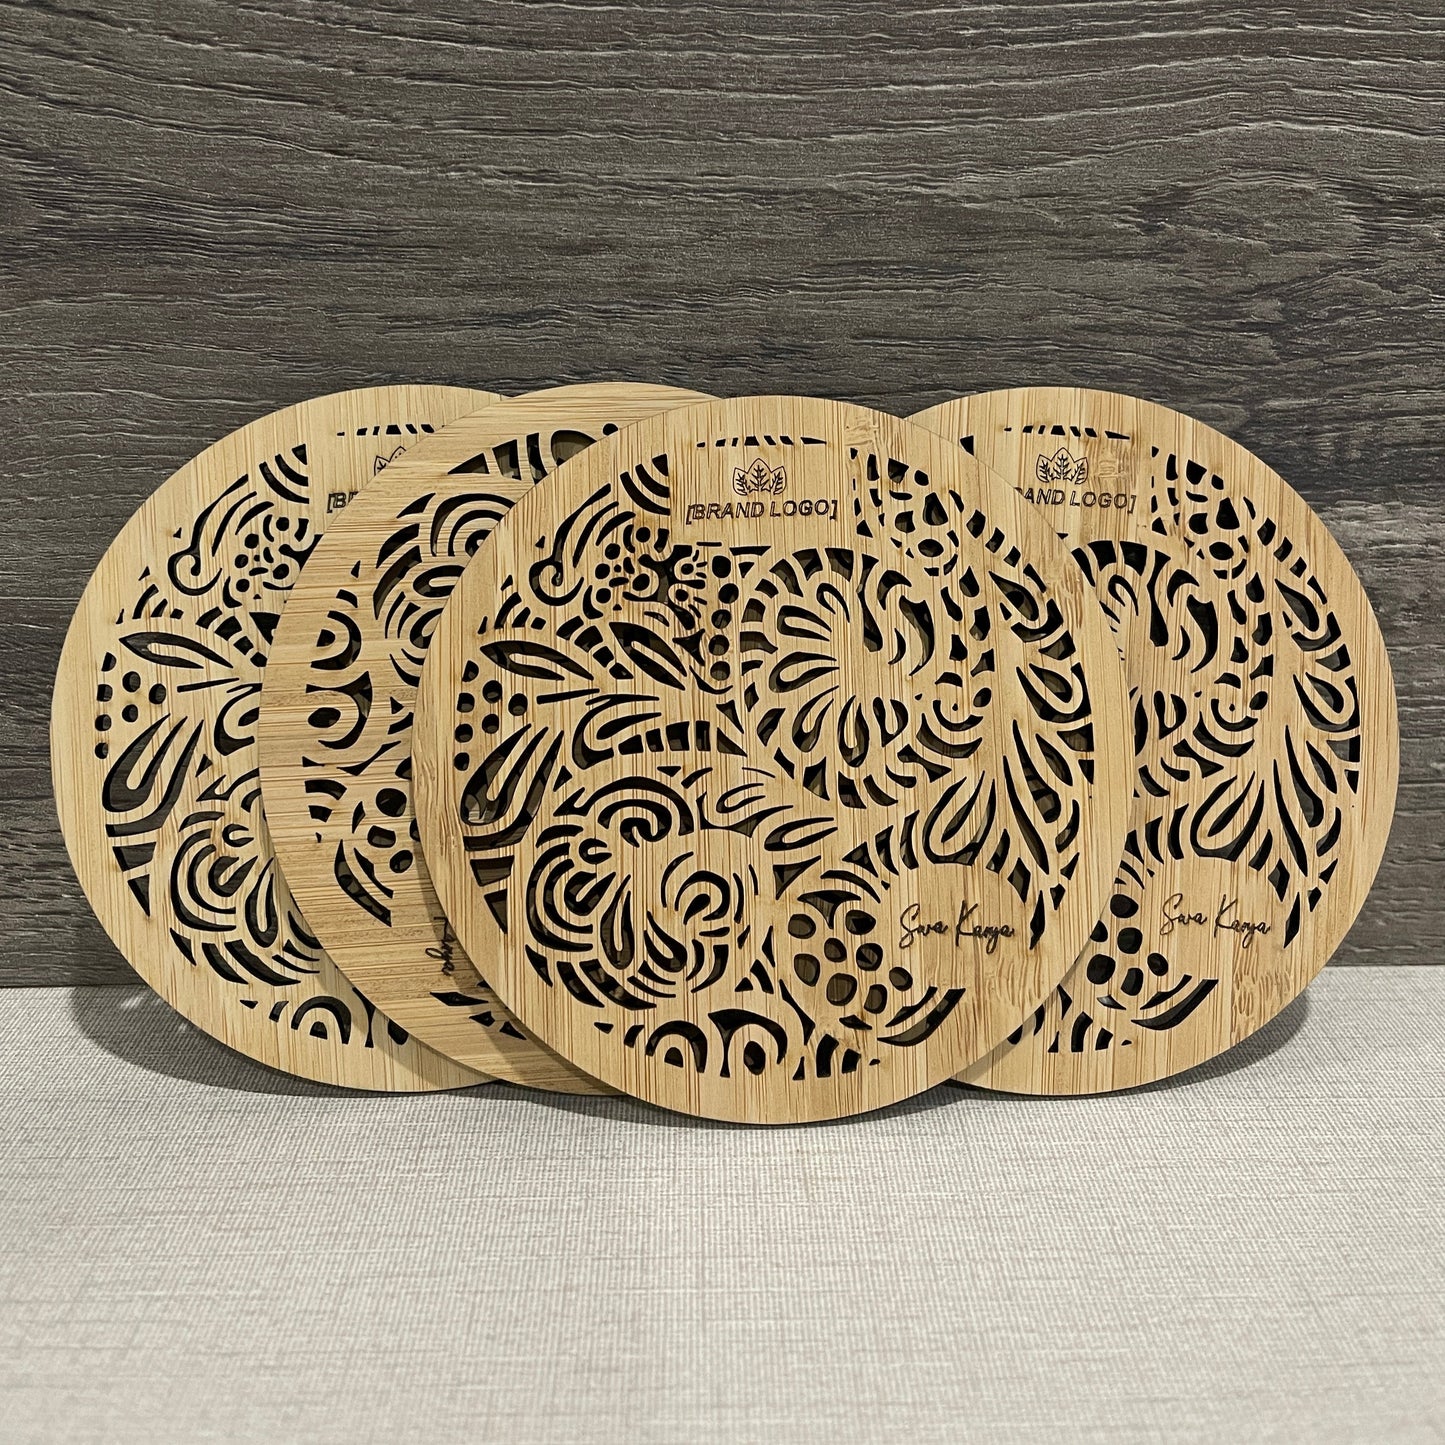 Coaster (wood)